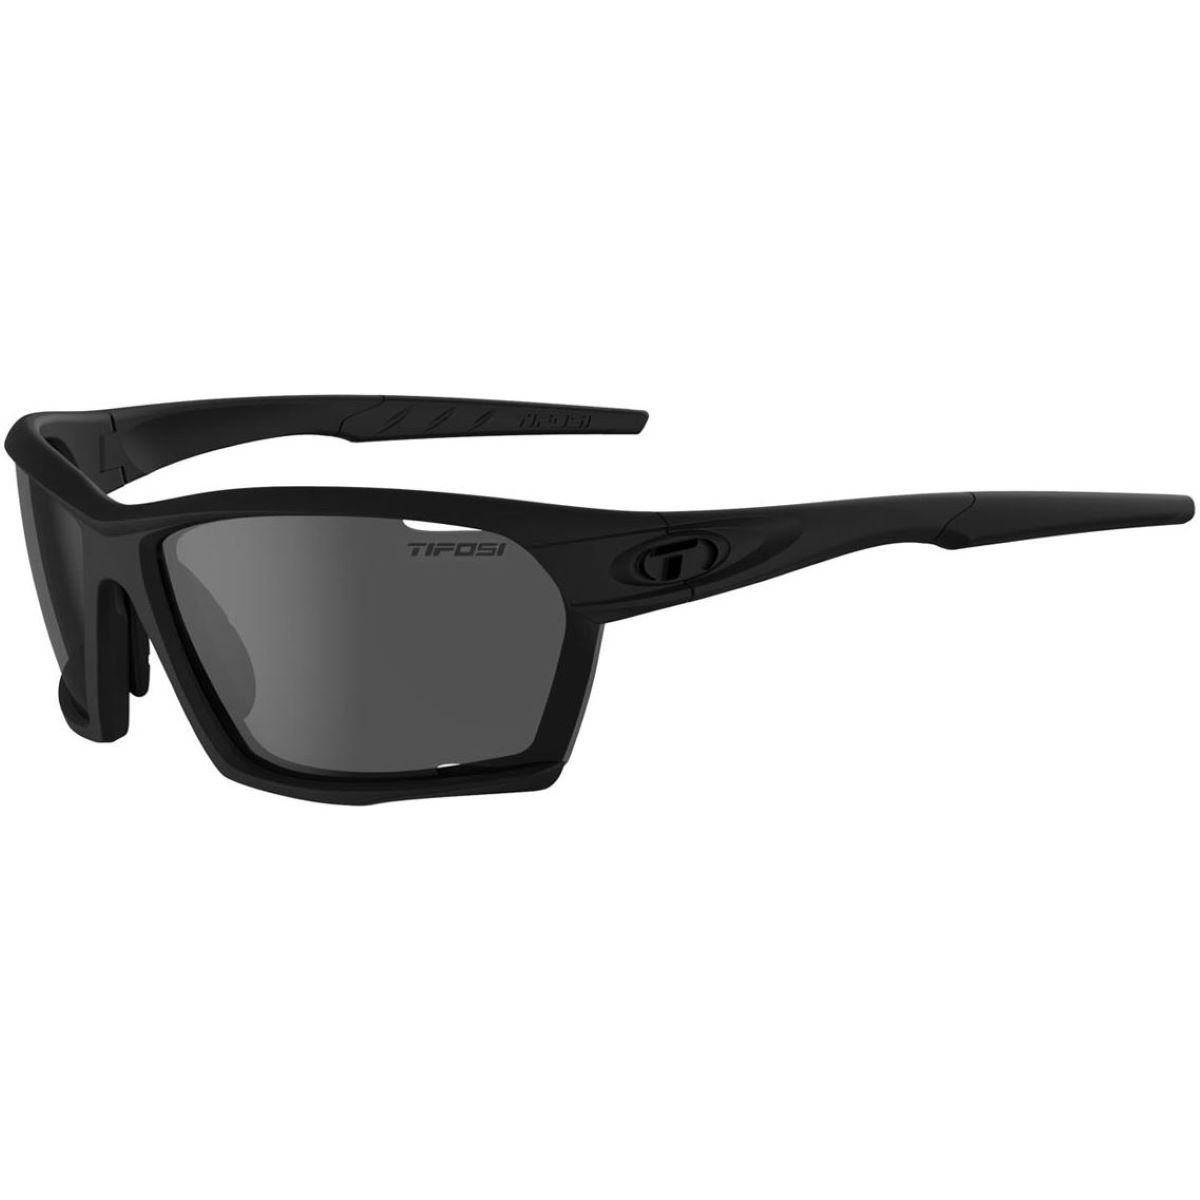 Tifosi Eyewear Kilo BlackOut Polarized Sunglasses - Gafas de sol